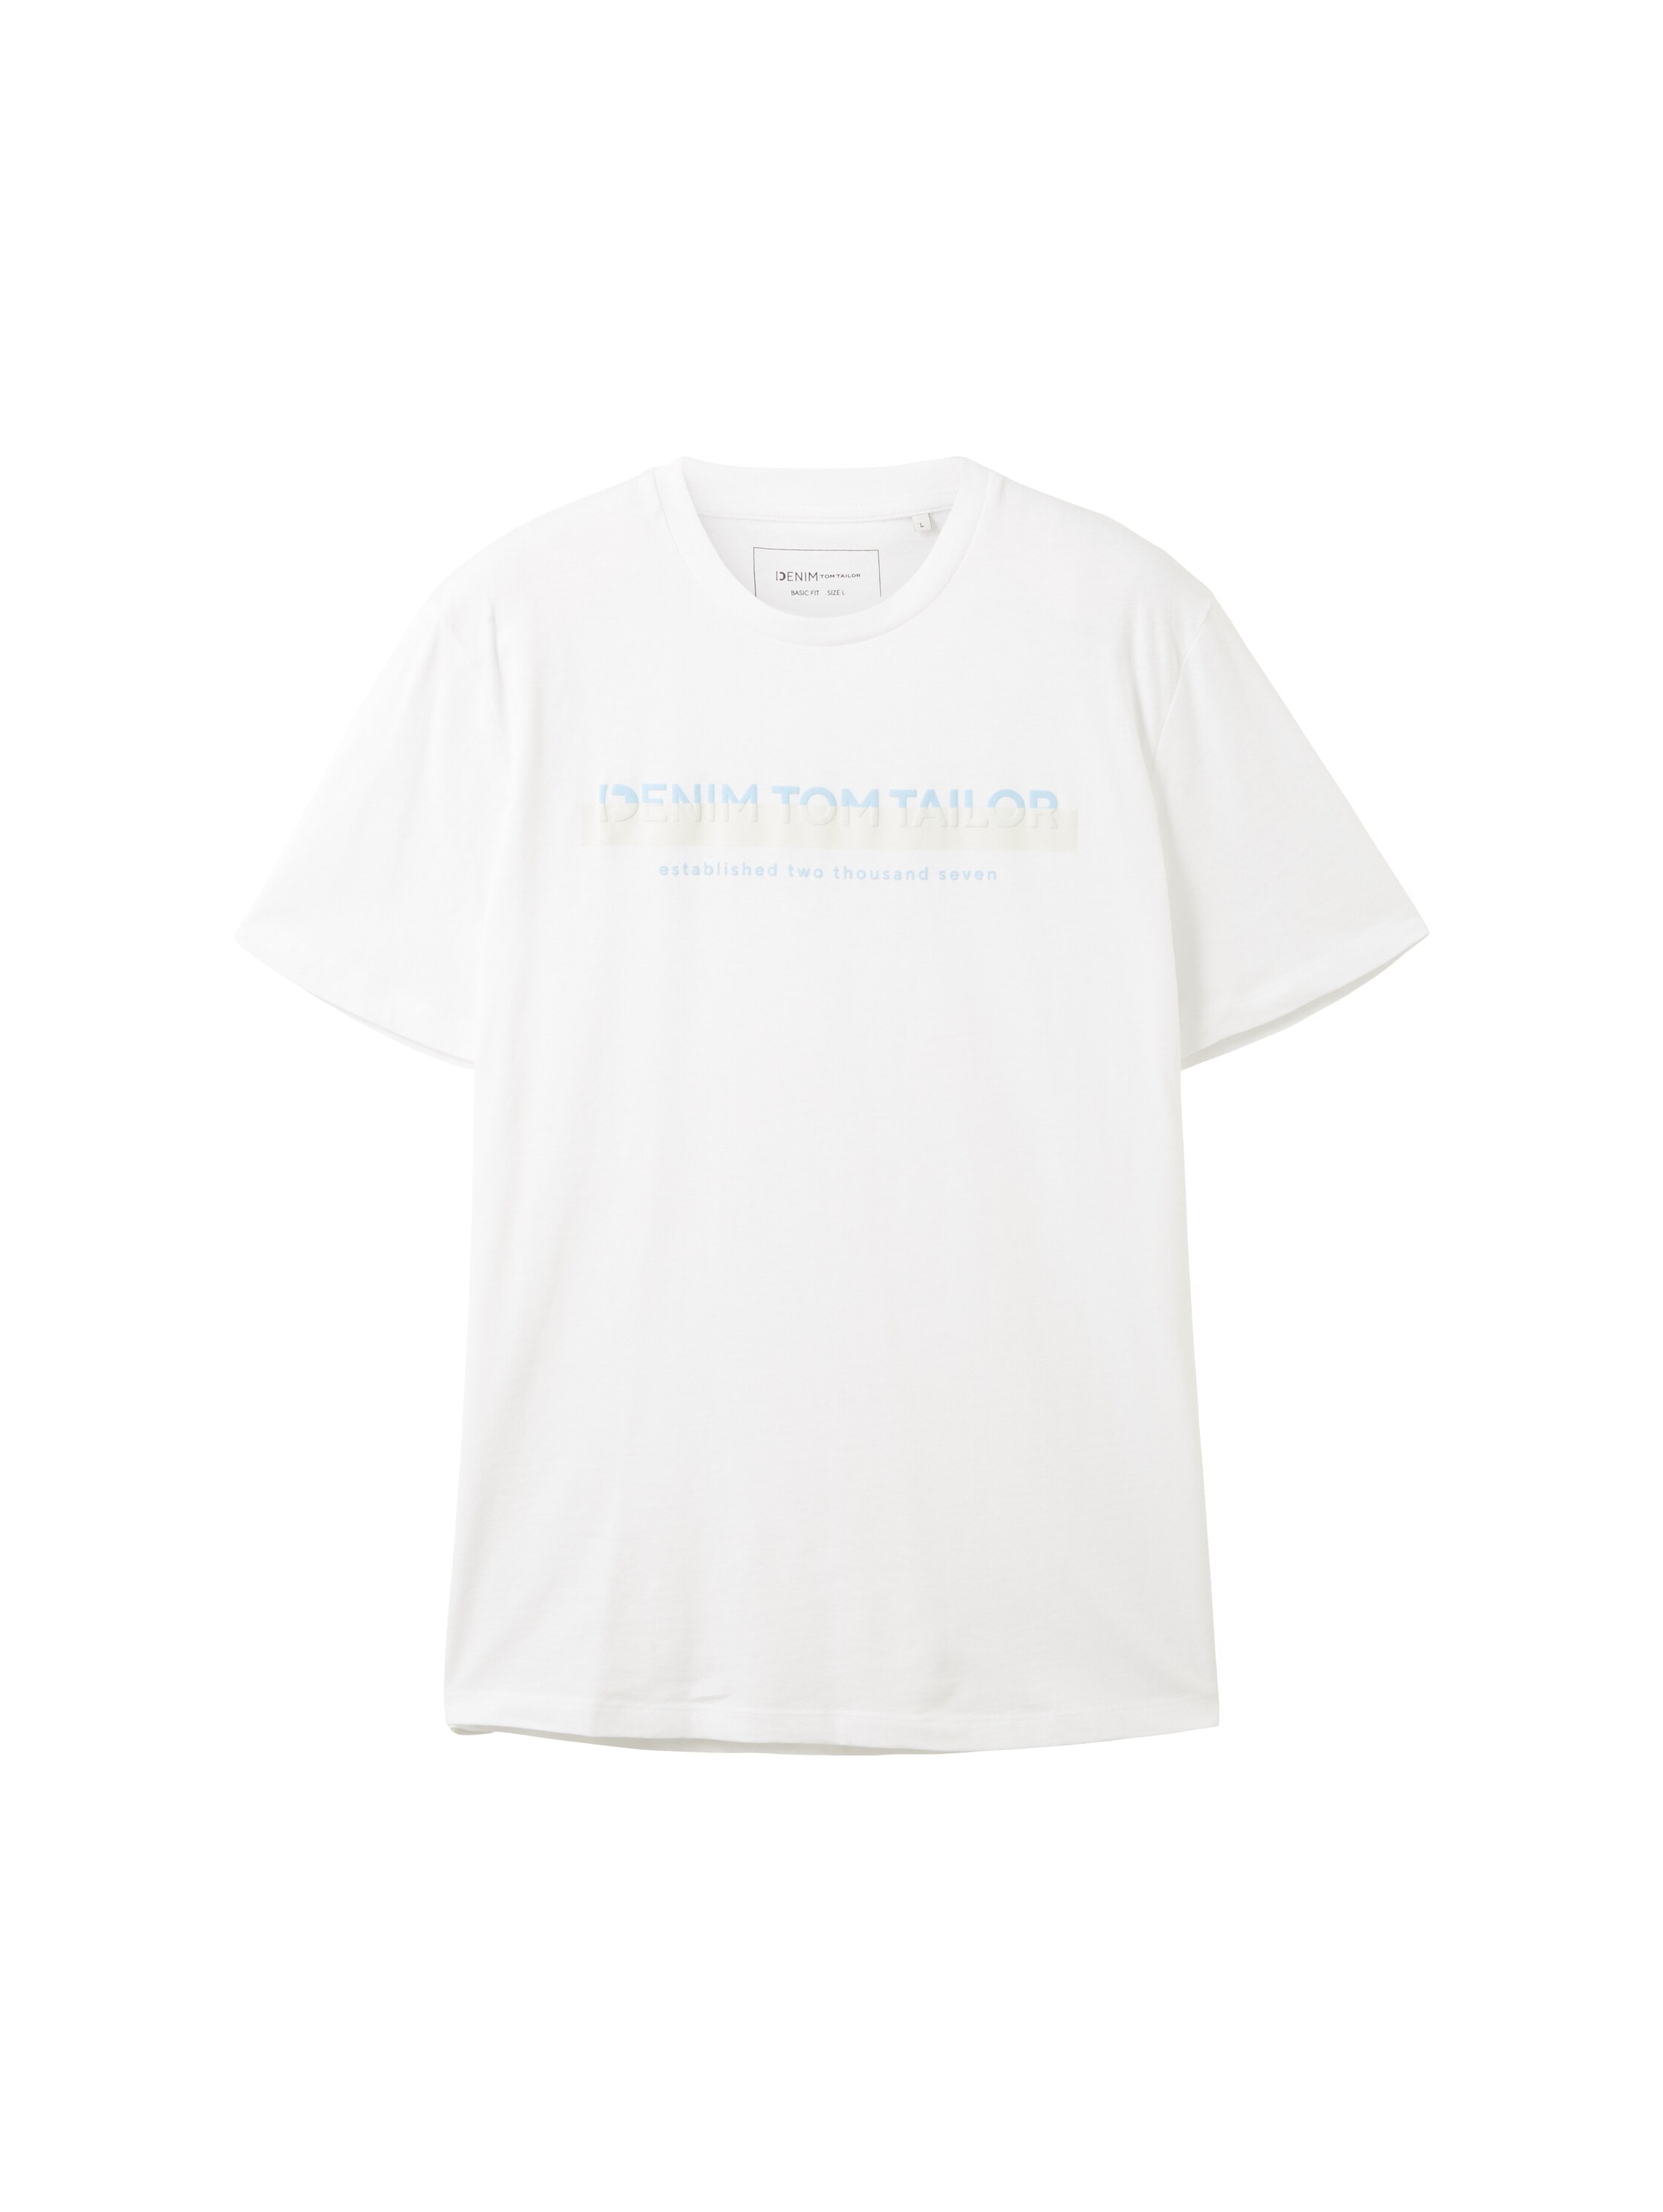 TOM TAILOR Denim T-Shirt, mit Logofrontprint